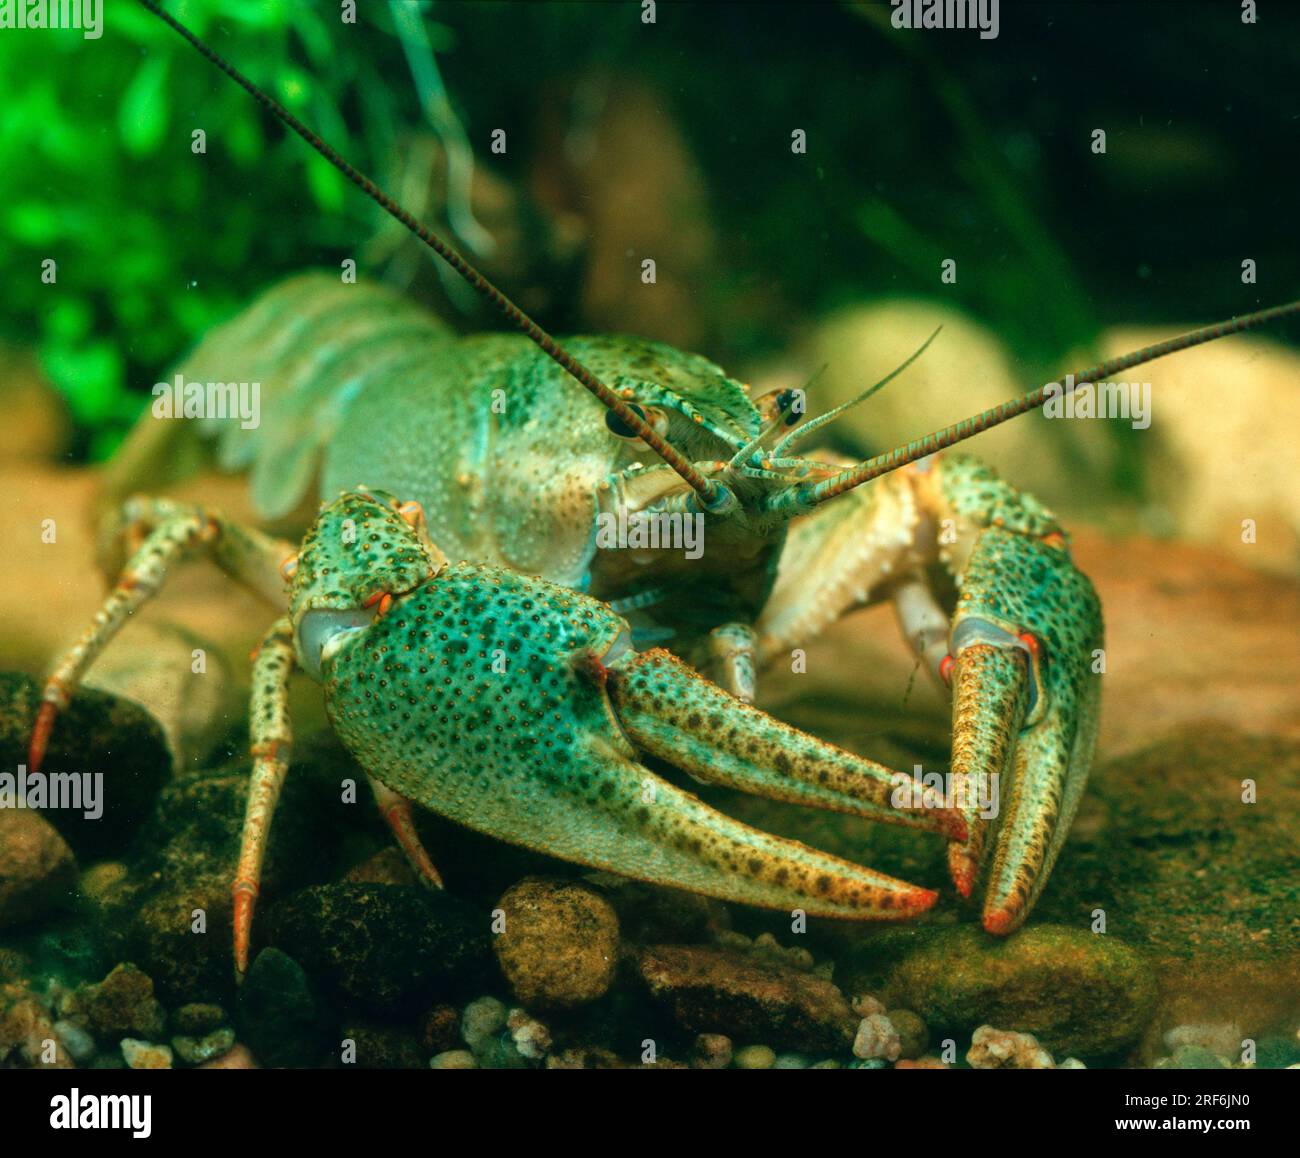 American crayfish, Camber crayfish (Orconectes limosus), Camber crayfish Stock Photo